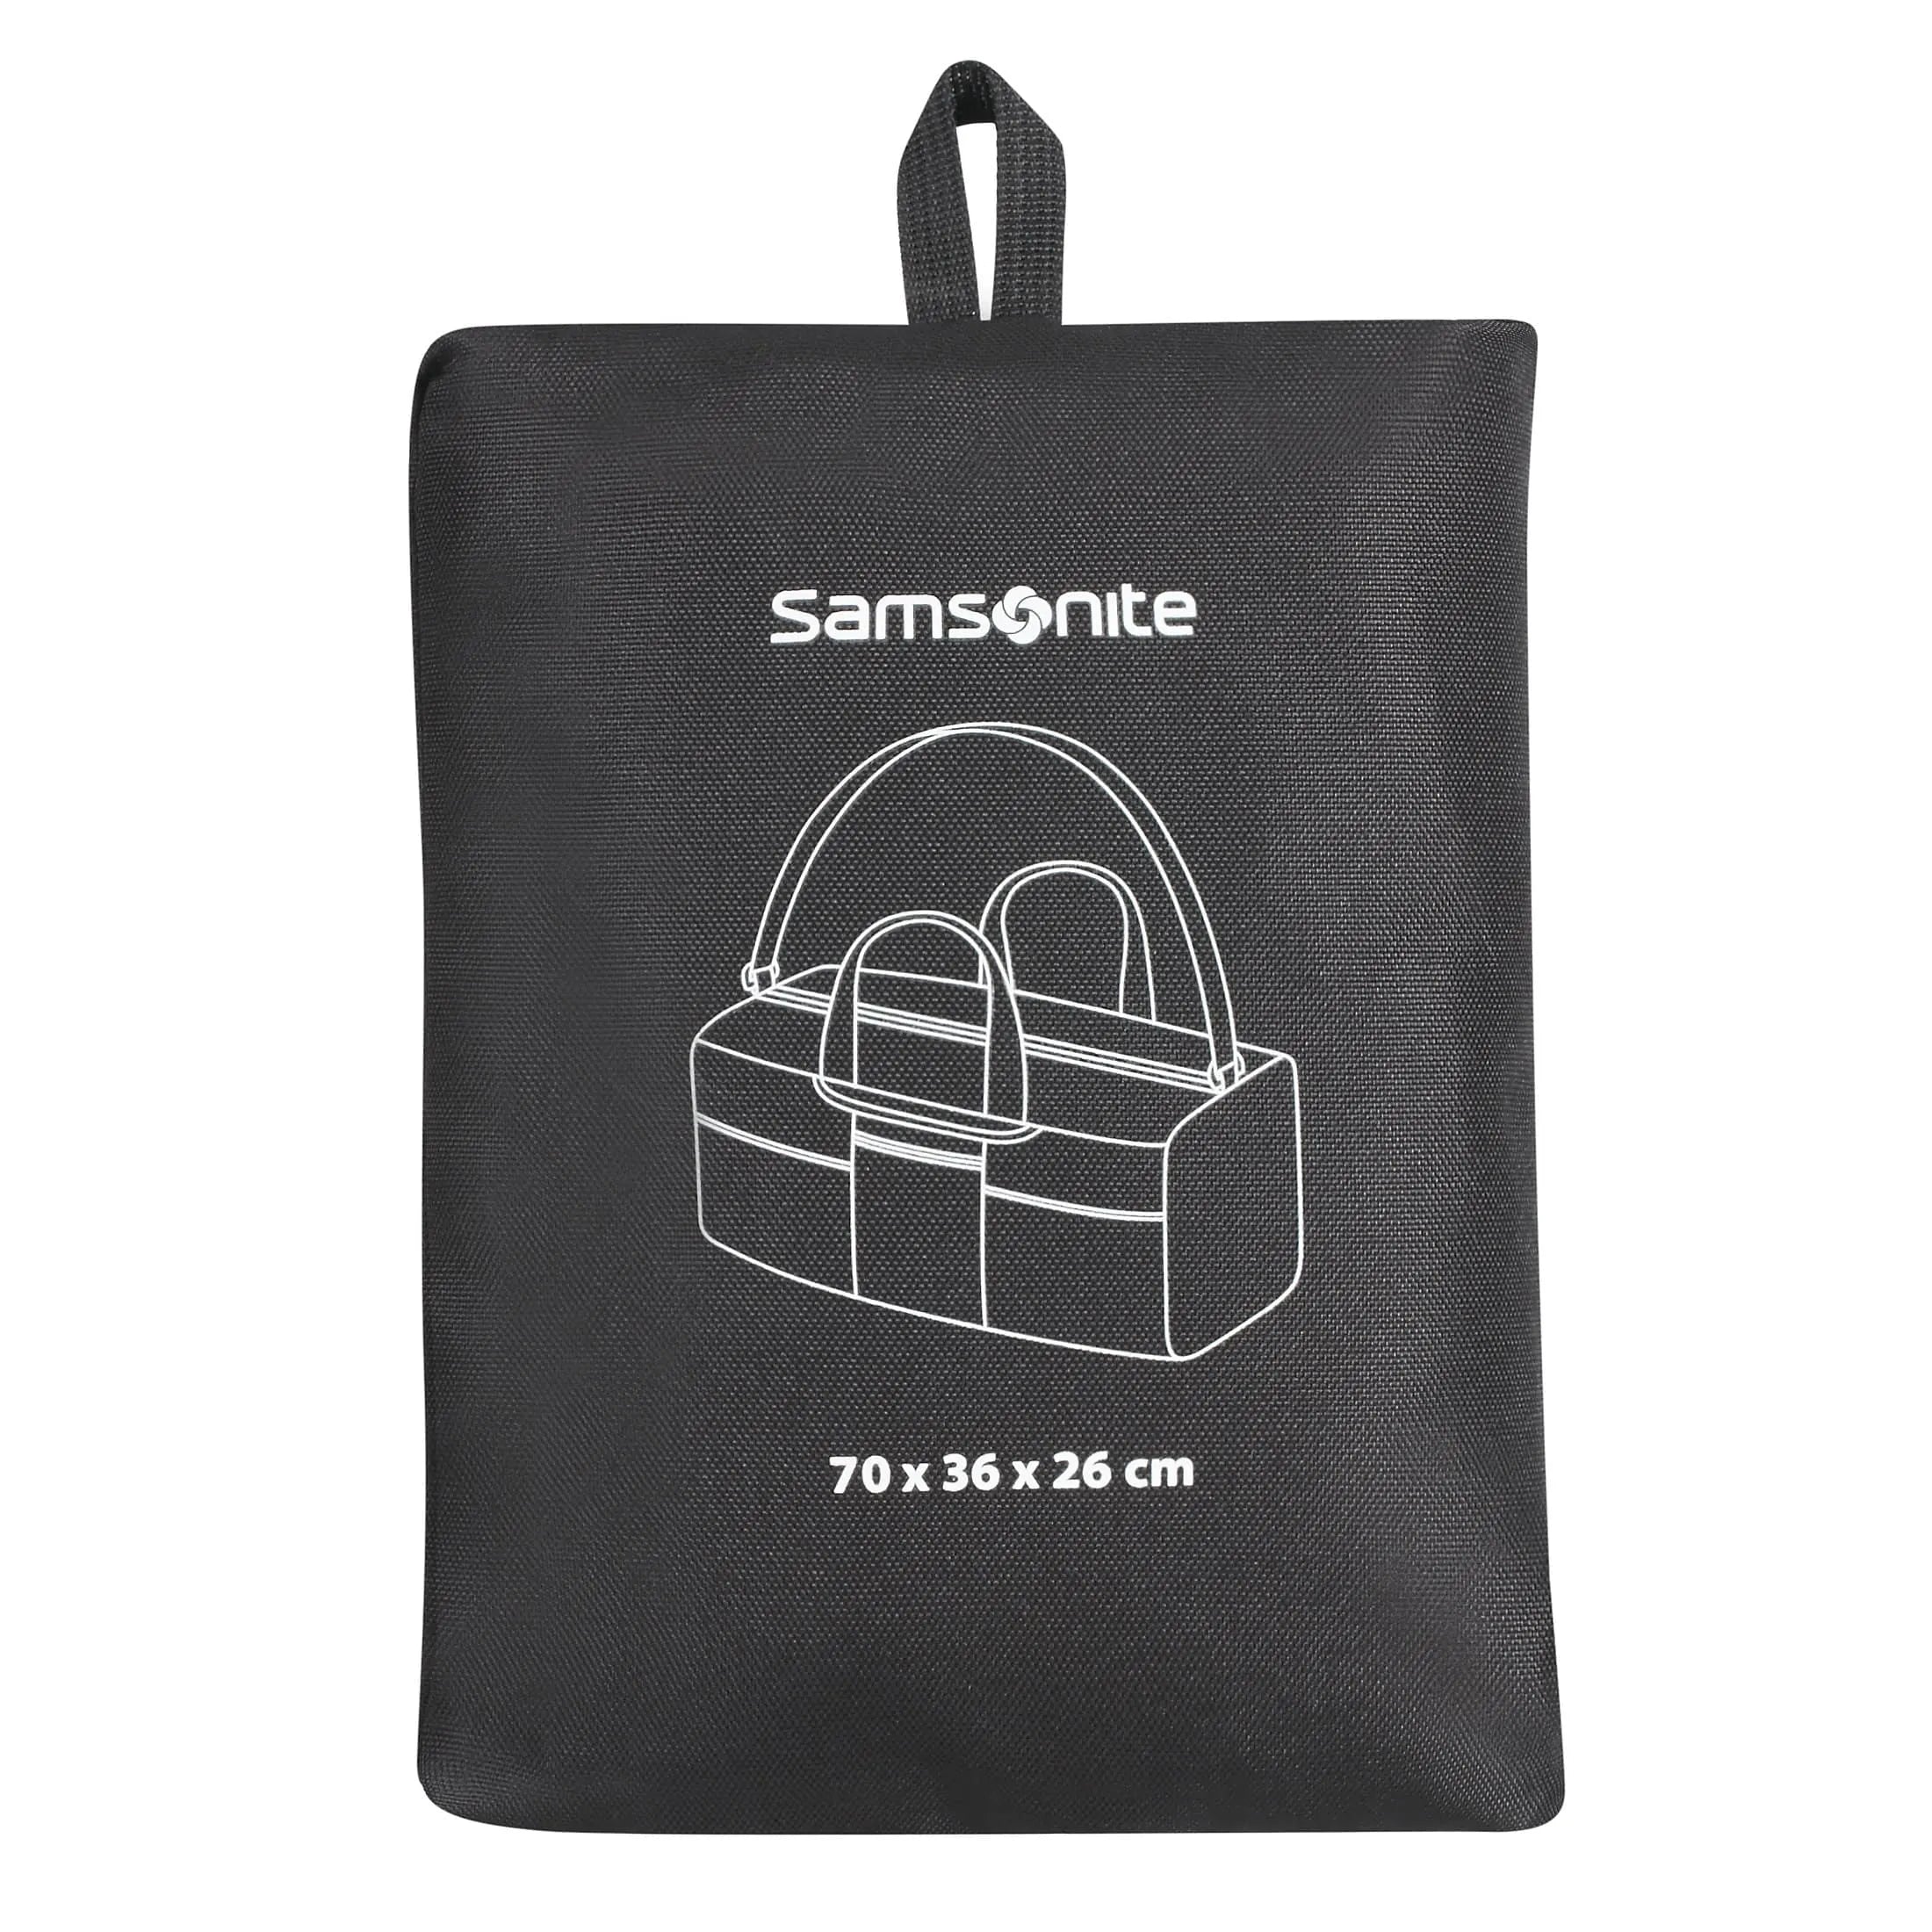 Samsonite Travel Accessories Reisetasche 70 cm - black